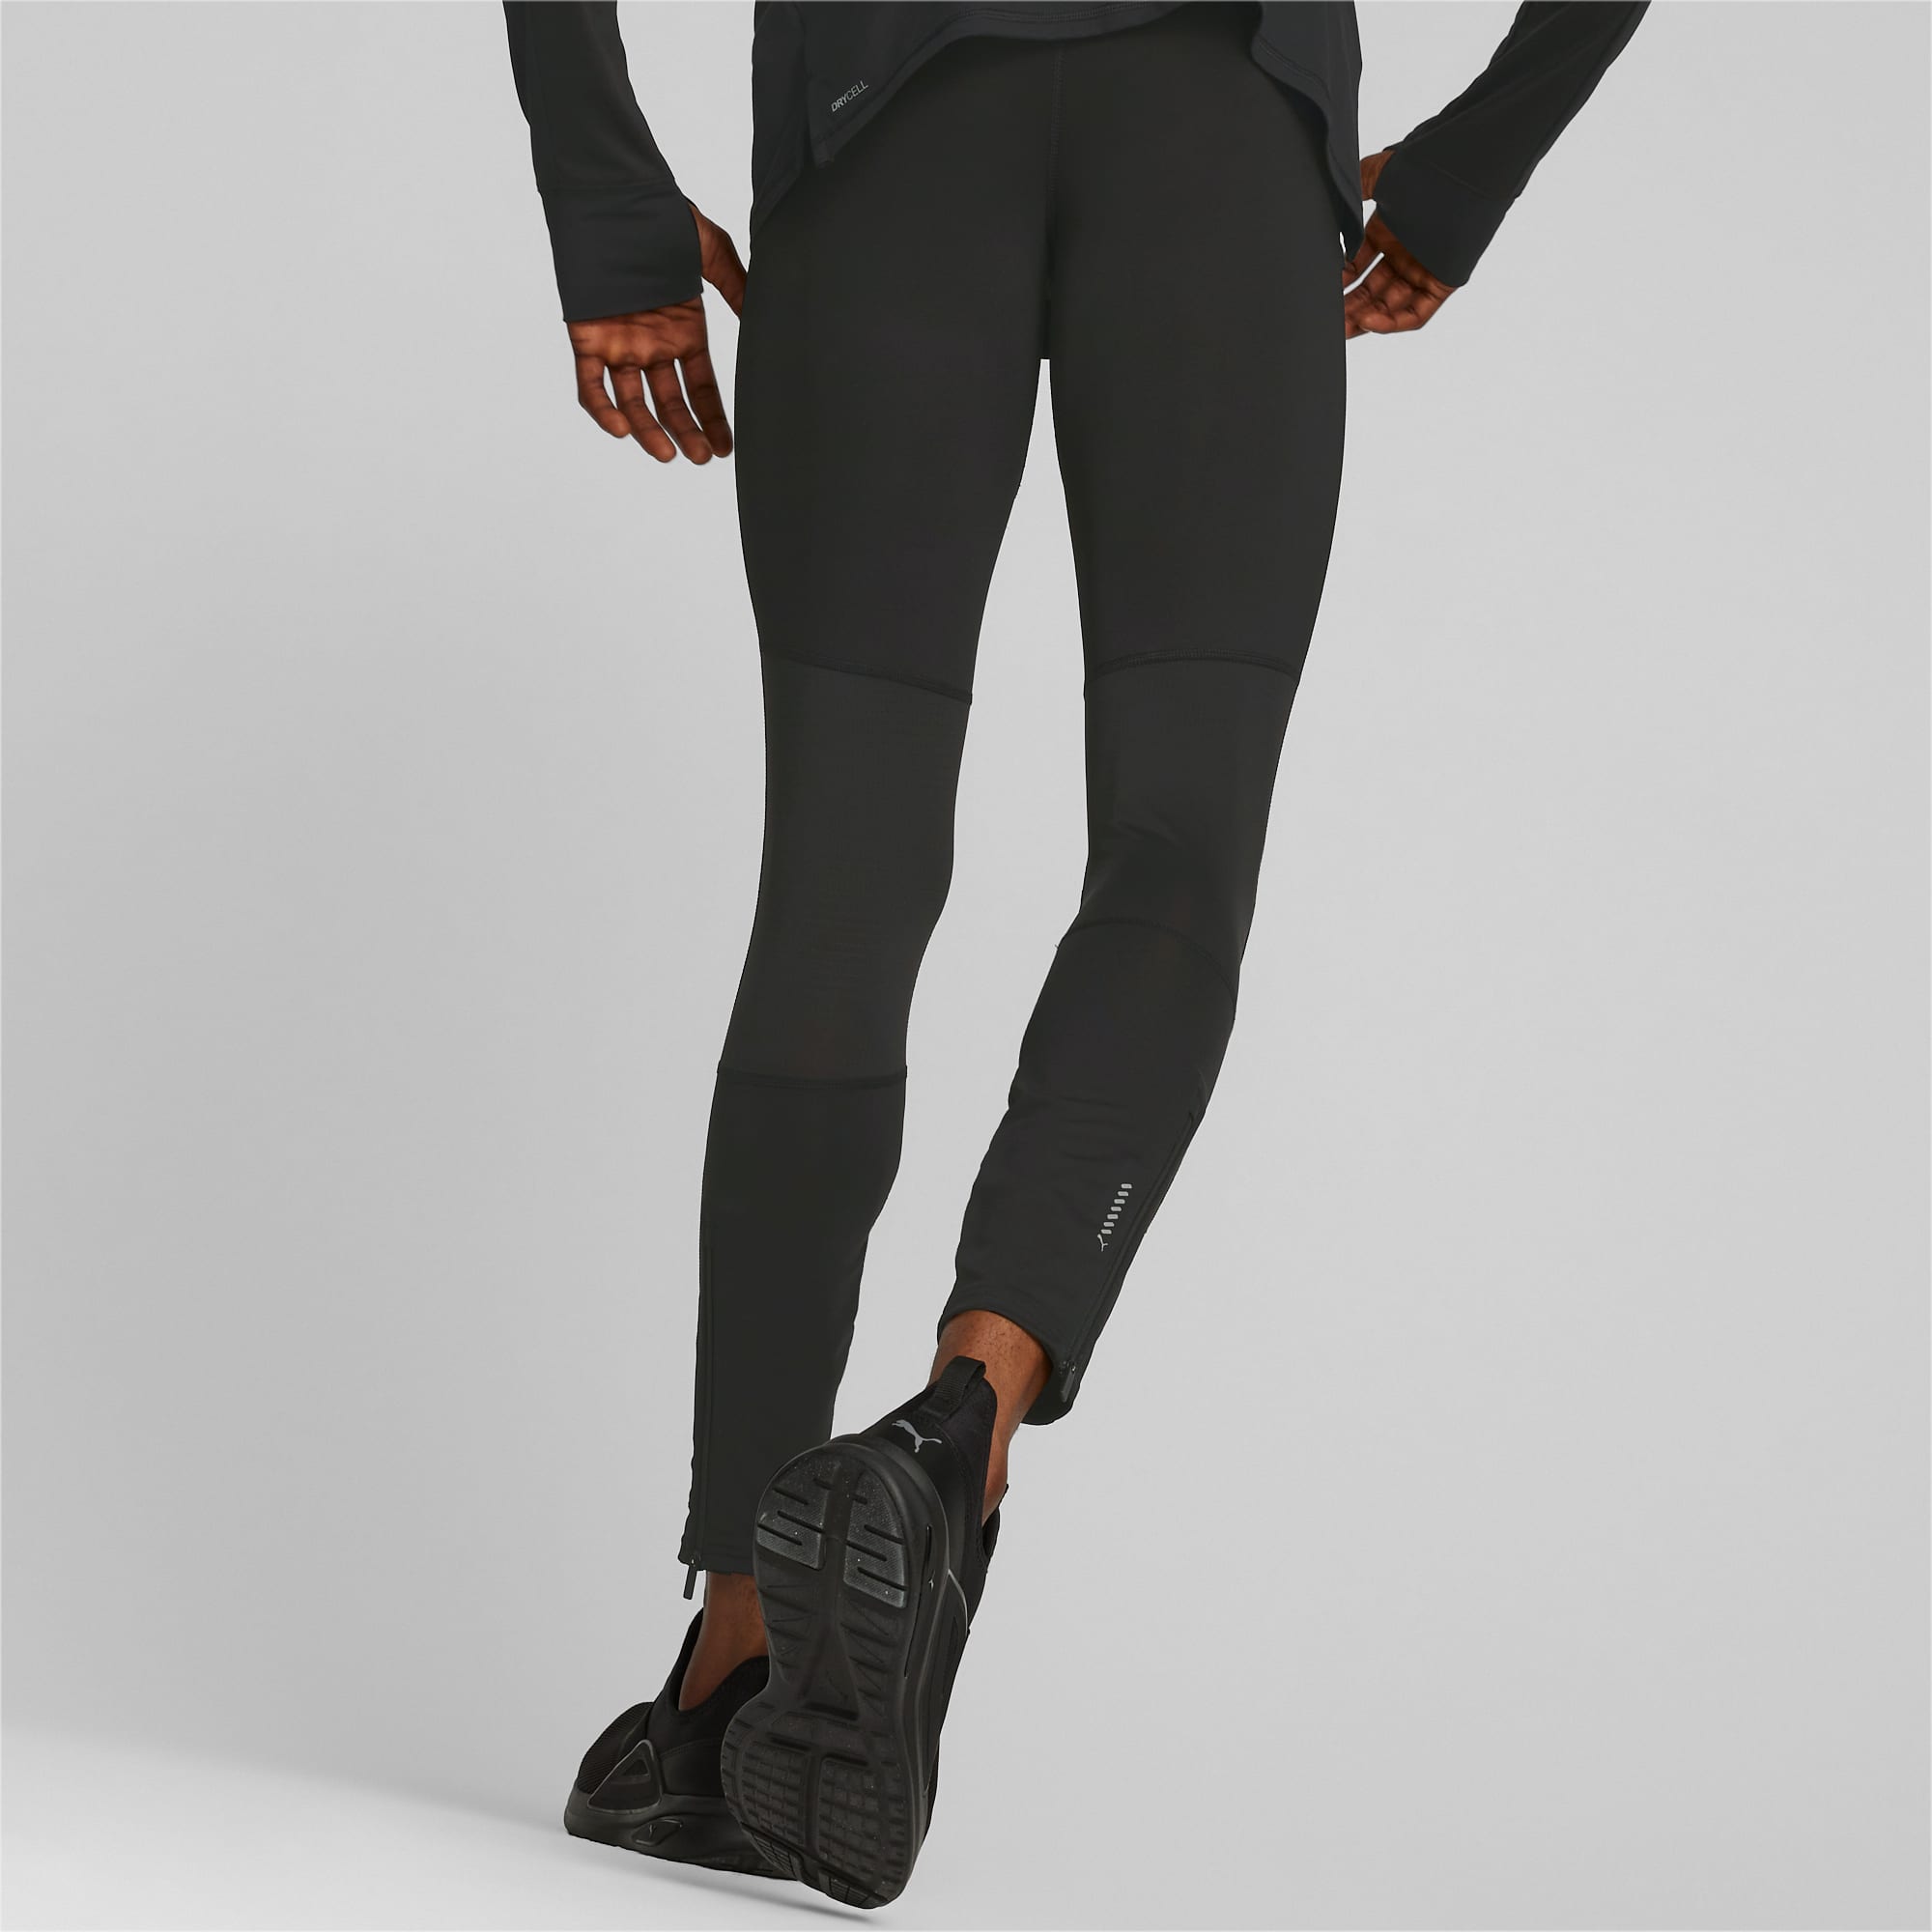 Shorts & Leggings 1  Mens tights, Urban athleisure, Gender fluid fashion